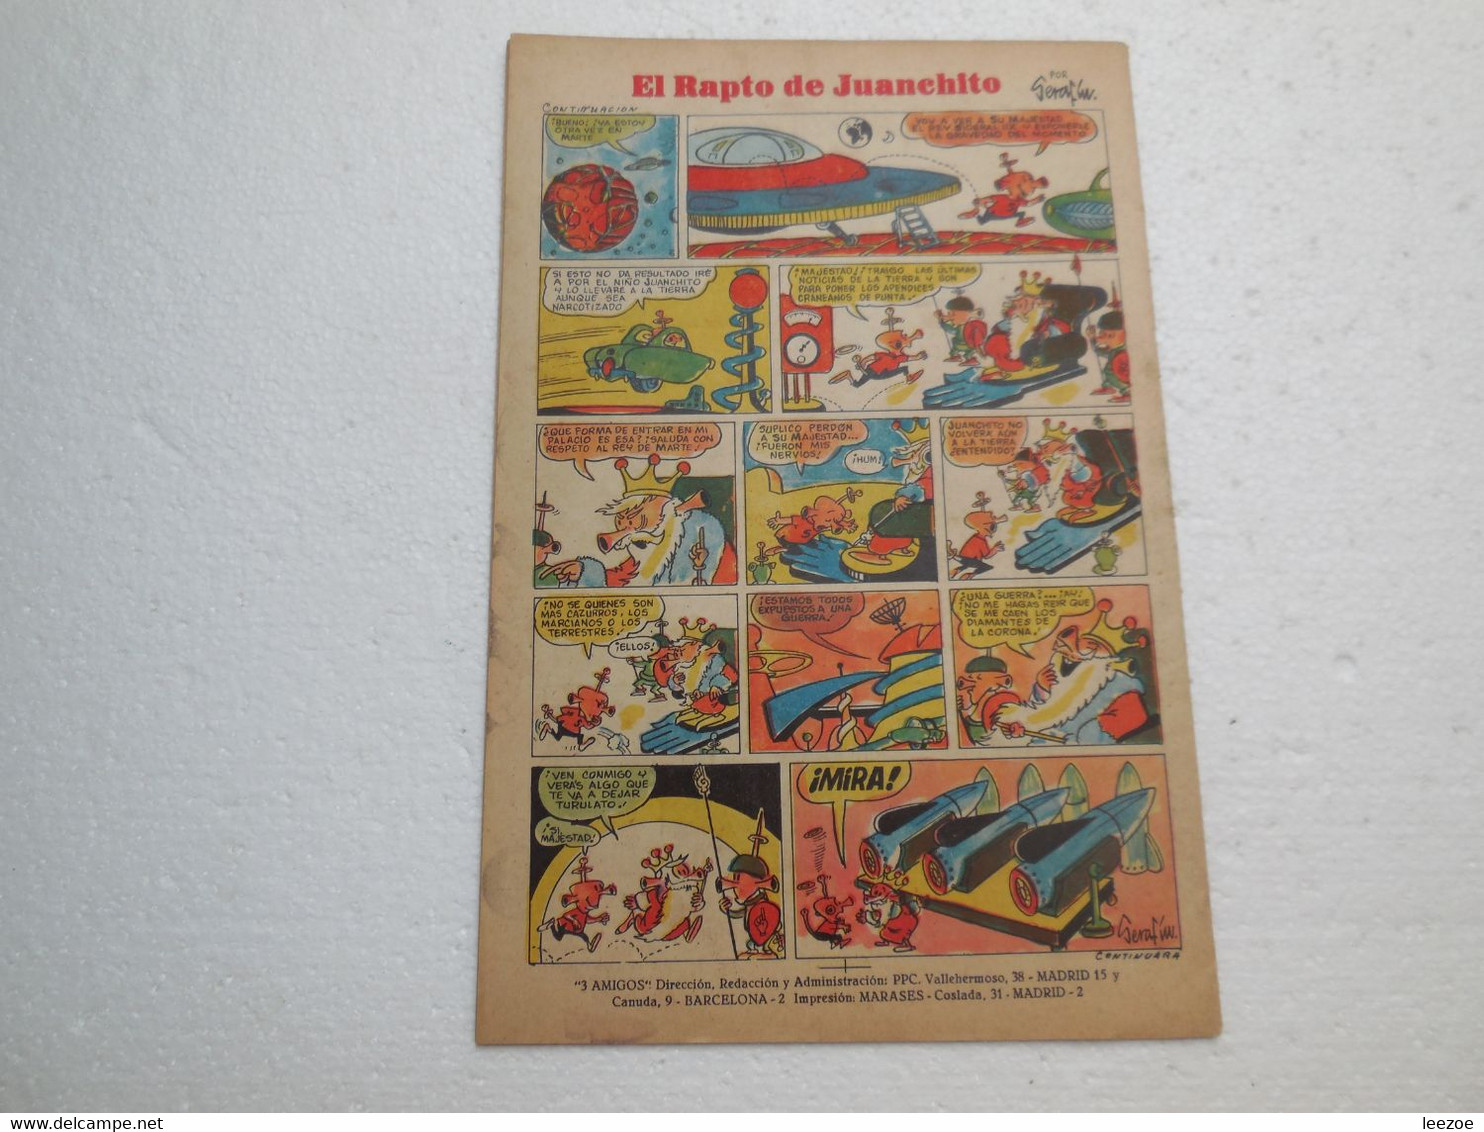 BD 3 AMIGOS 1960 AVEC TINTIN EN ESPAGNOL, Passage De Rackham Le Rouge.....N5.04.02 - Tintin (Tim Und Struppi)